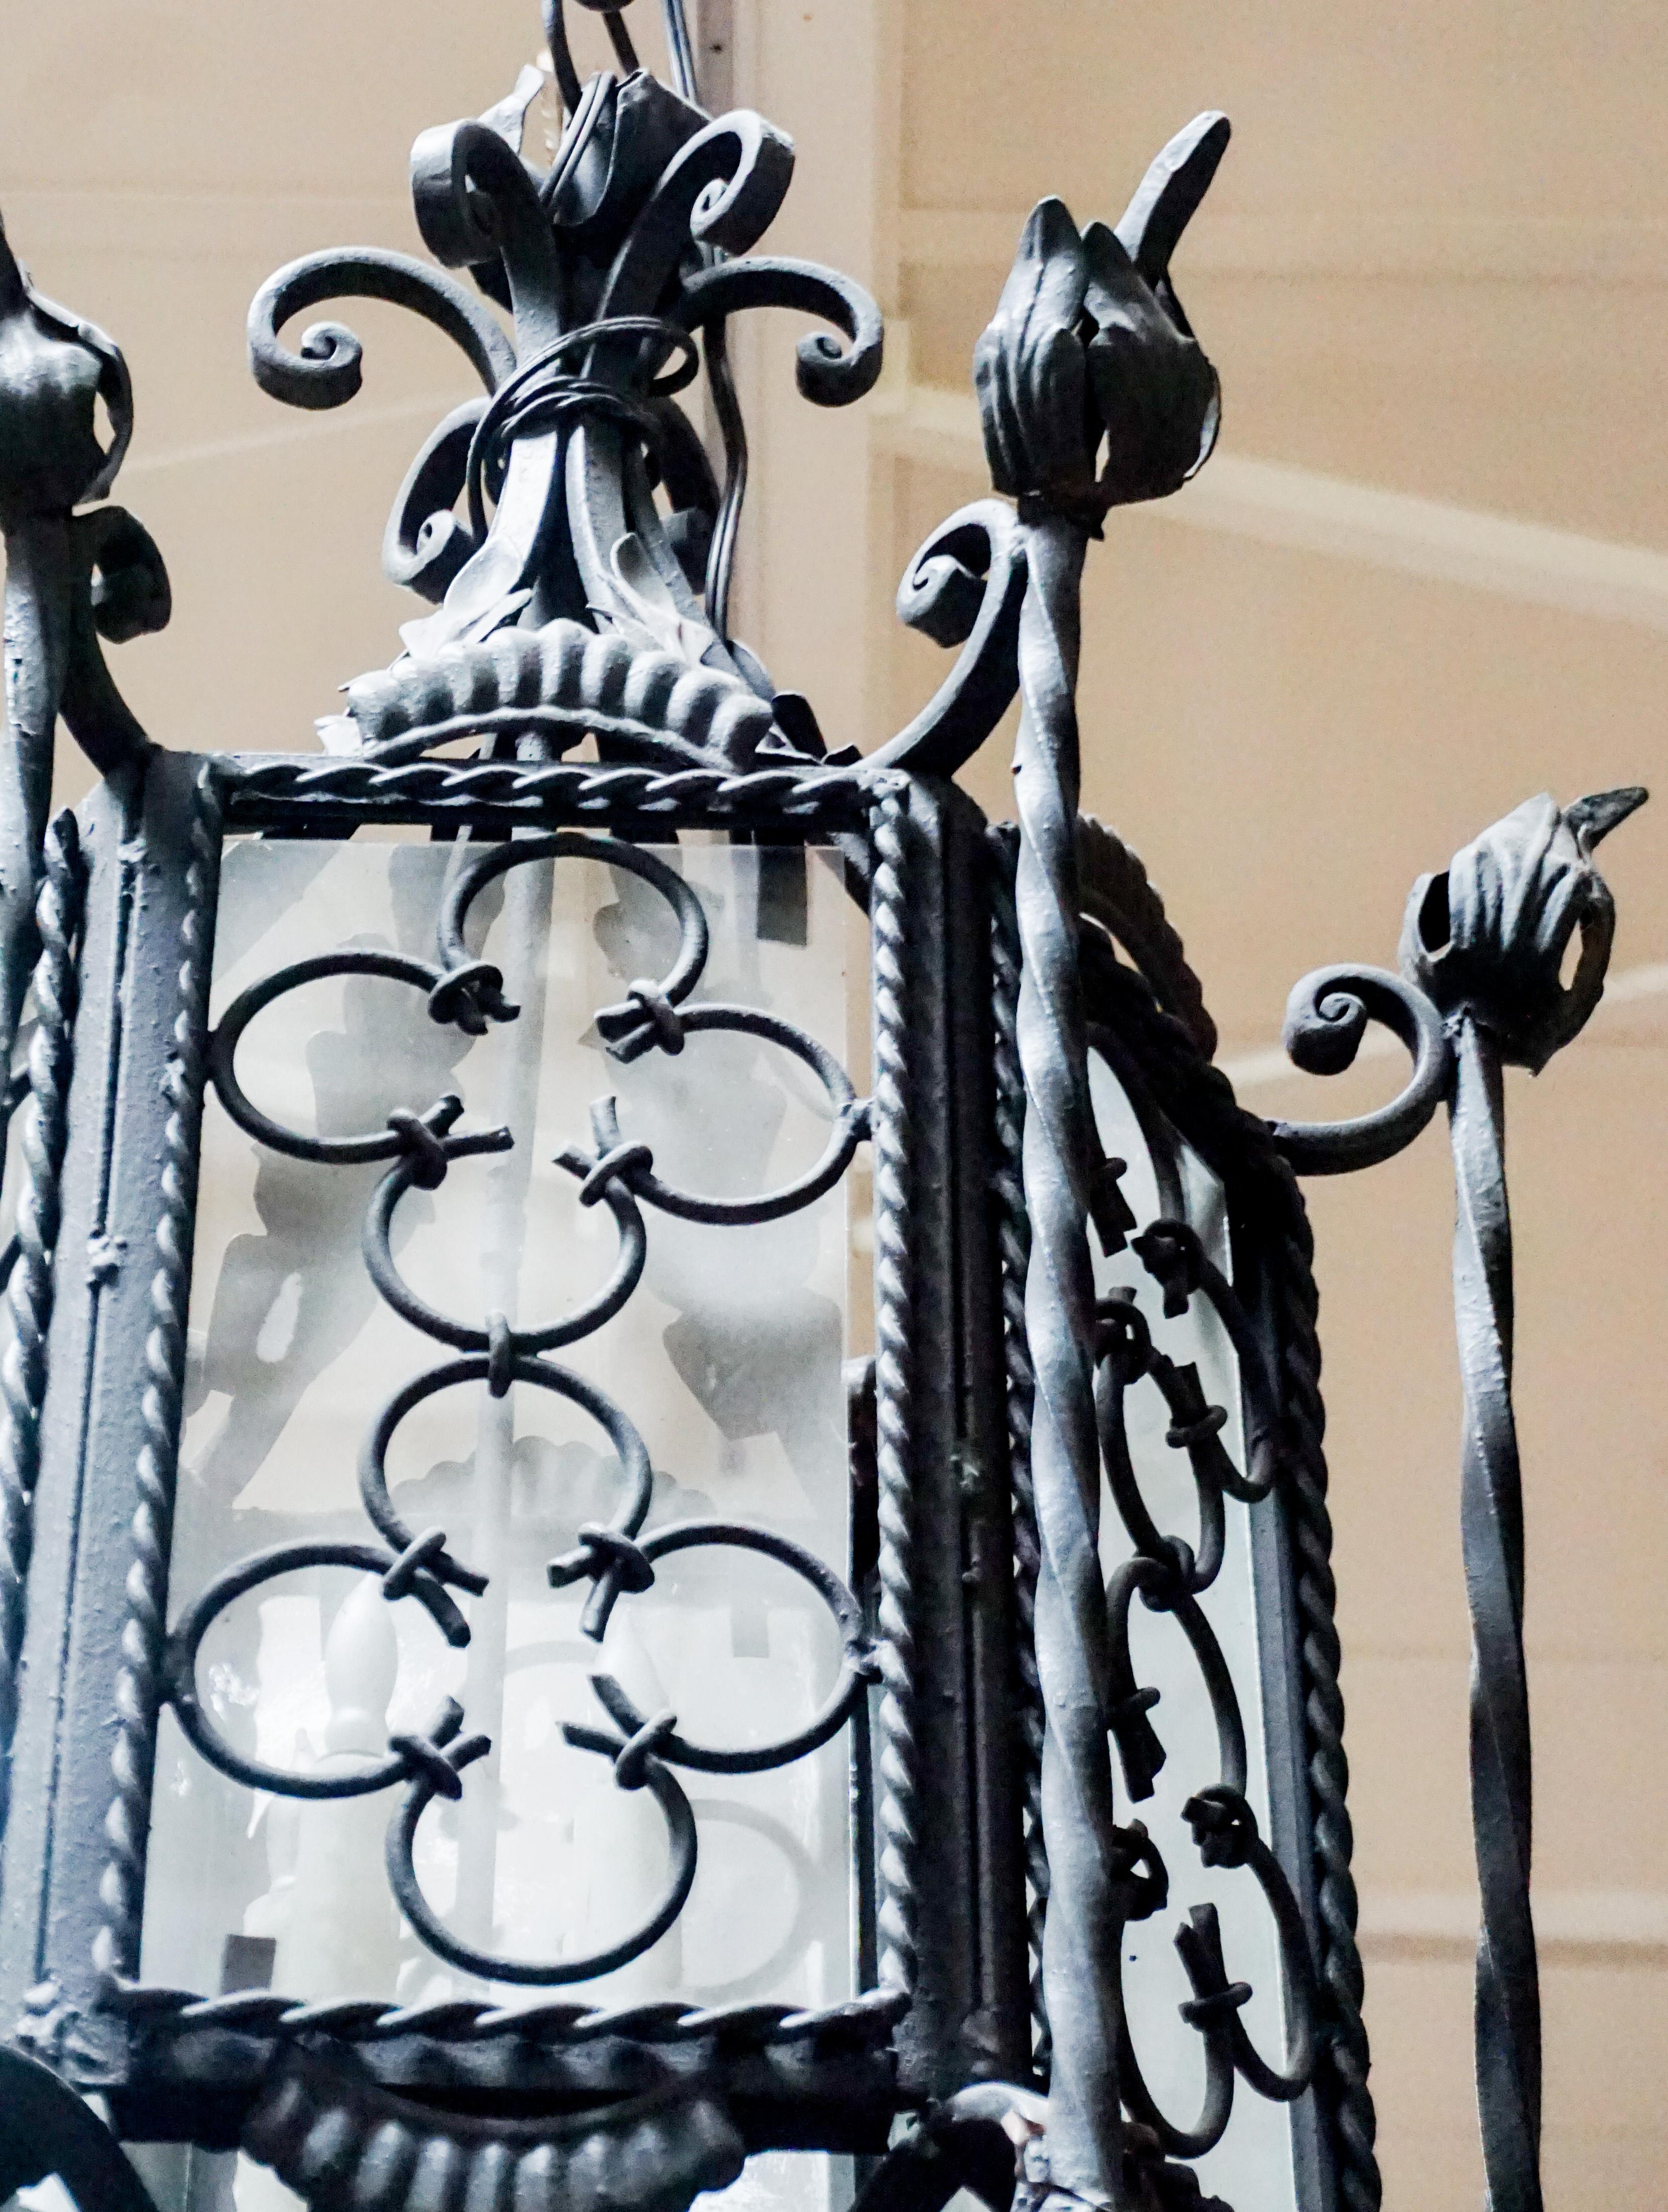 Medium handwrought iron hanging lantern with Gothic quatrefoil motif.